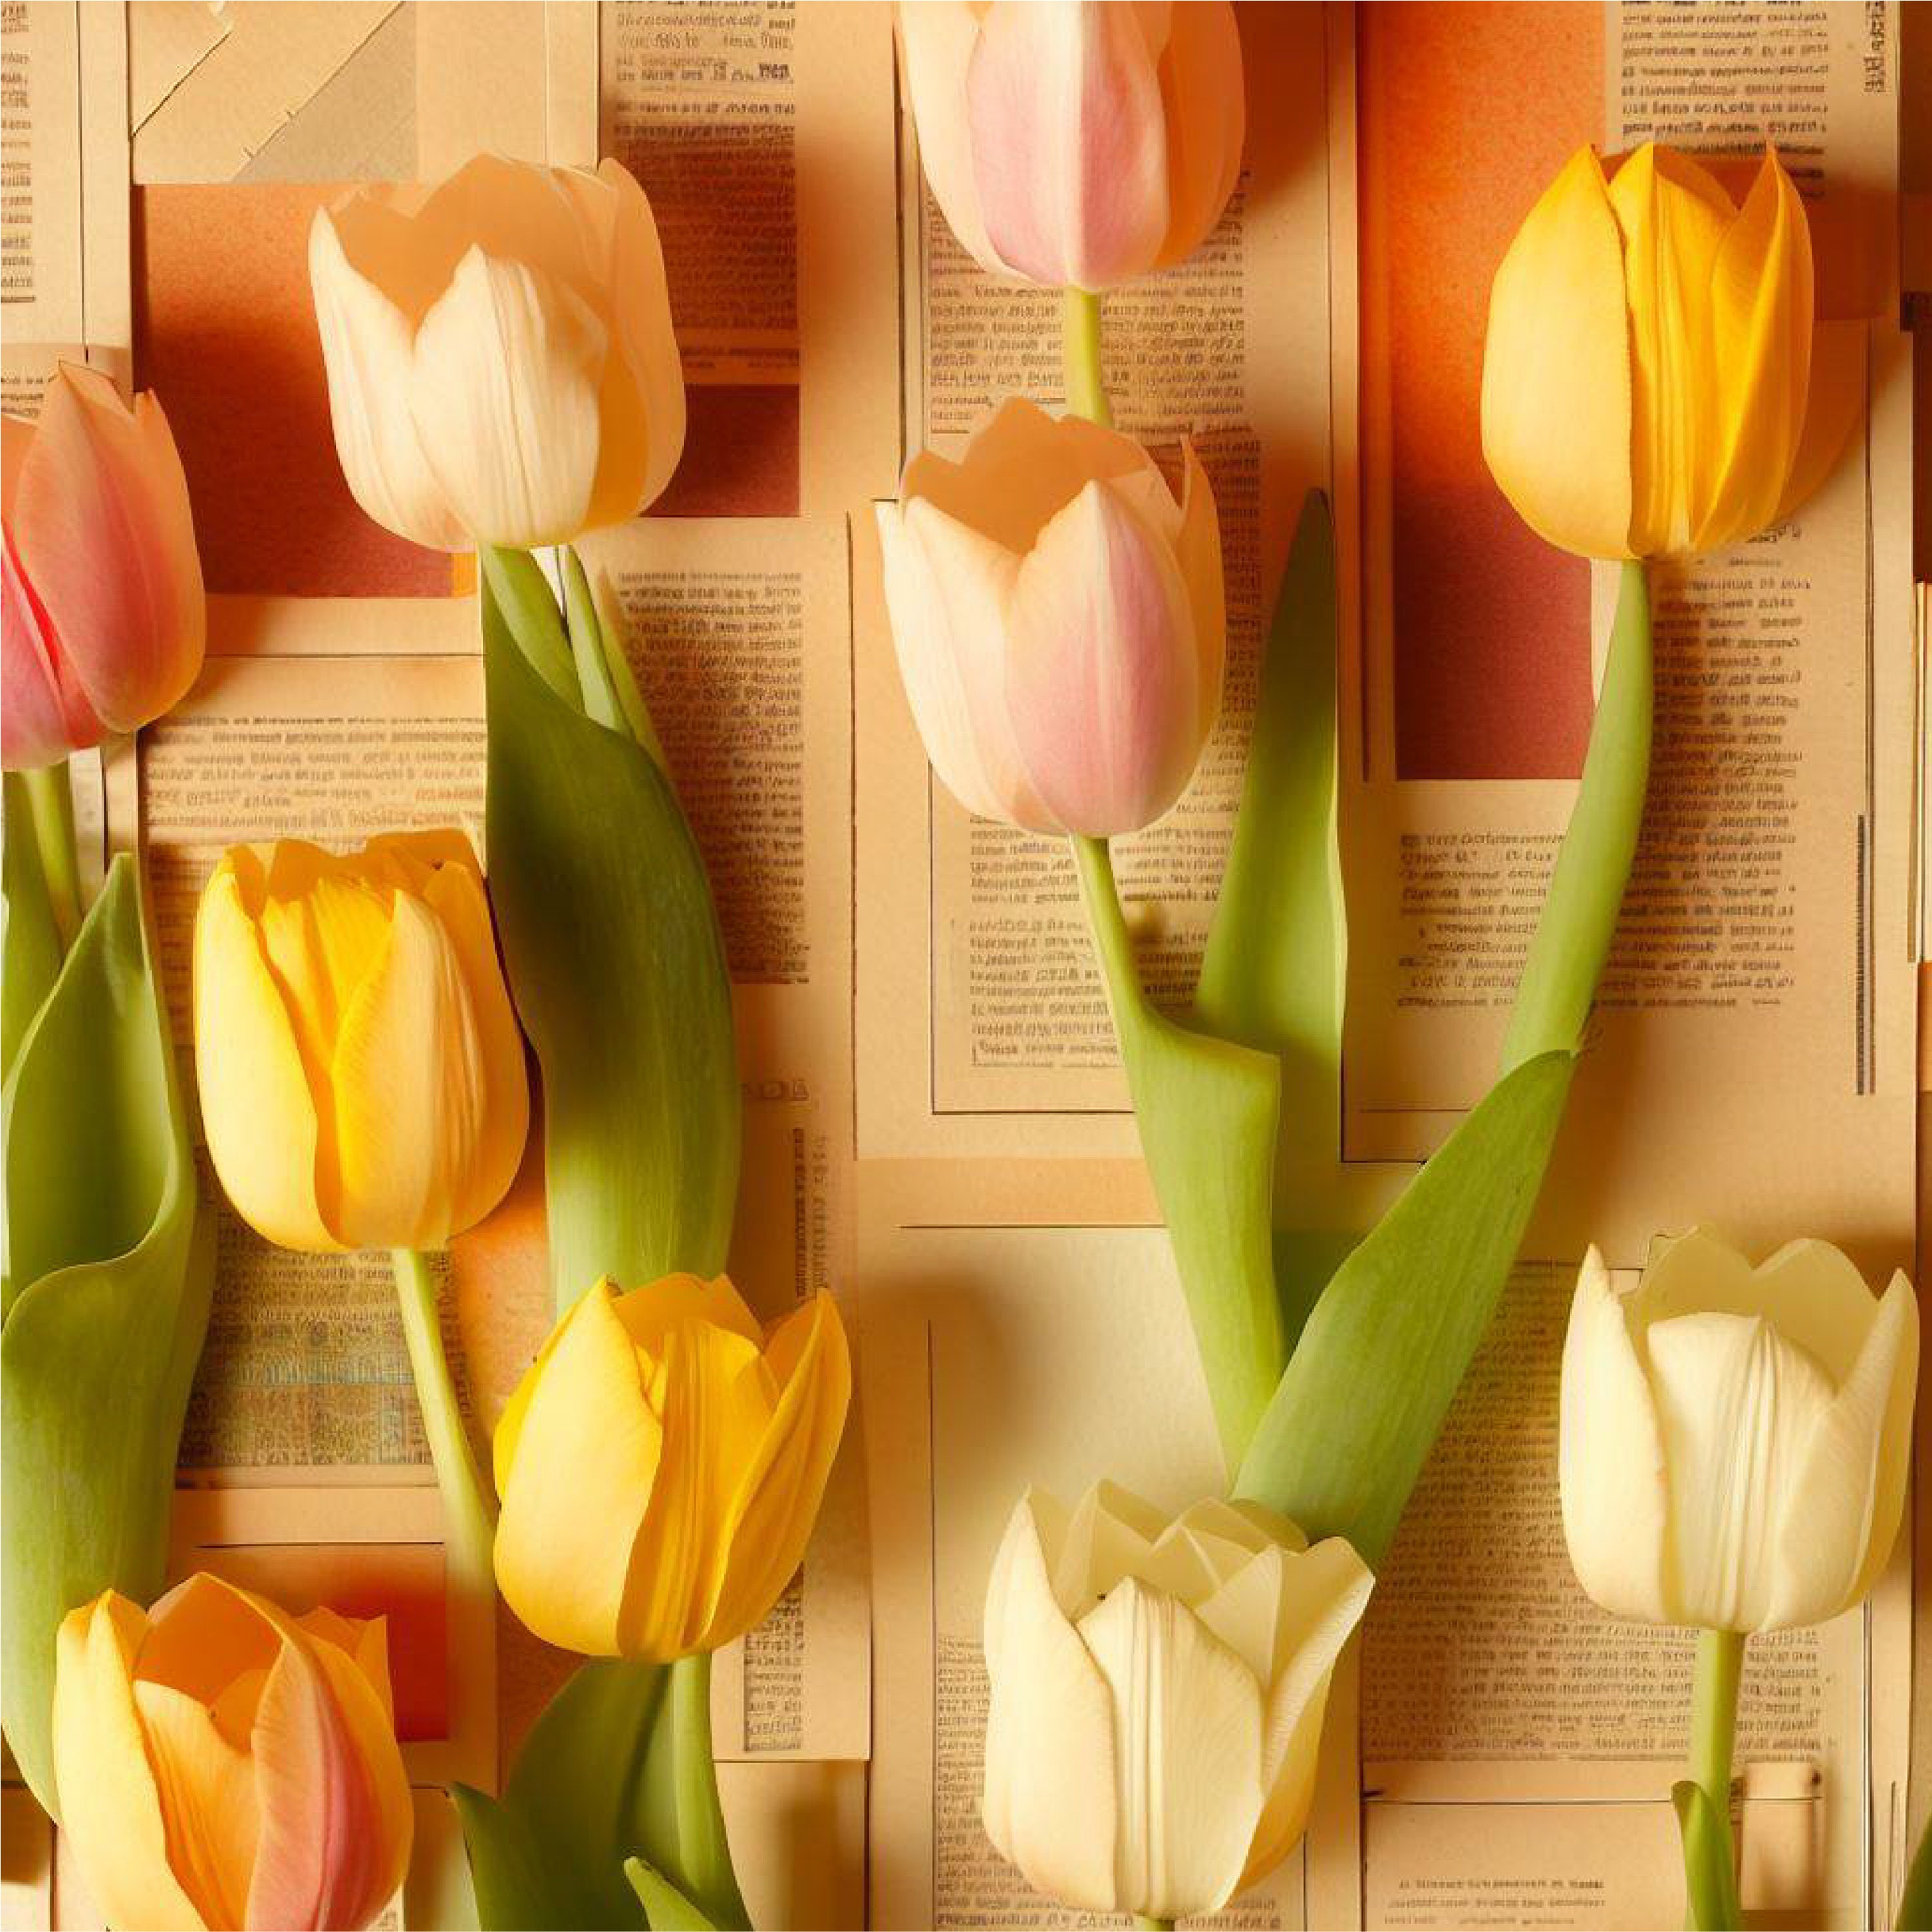 Yellow Tulip  Pop Up Card - Northlight Interiors, Inc.